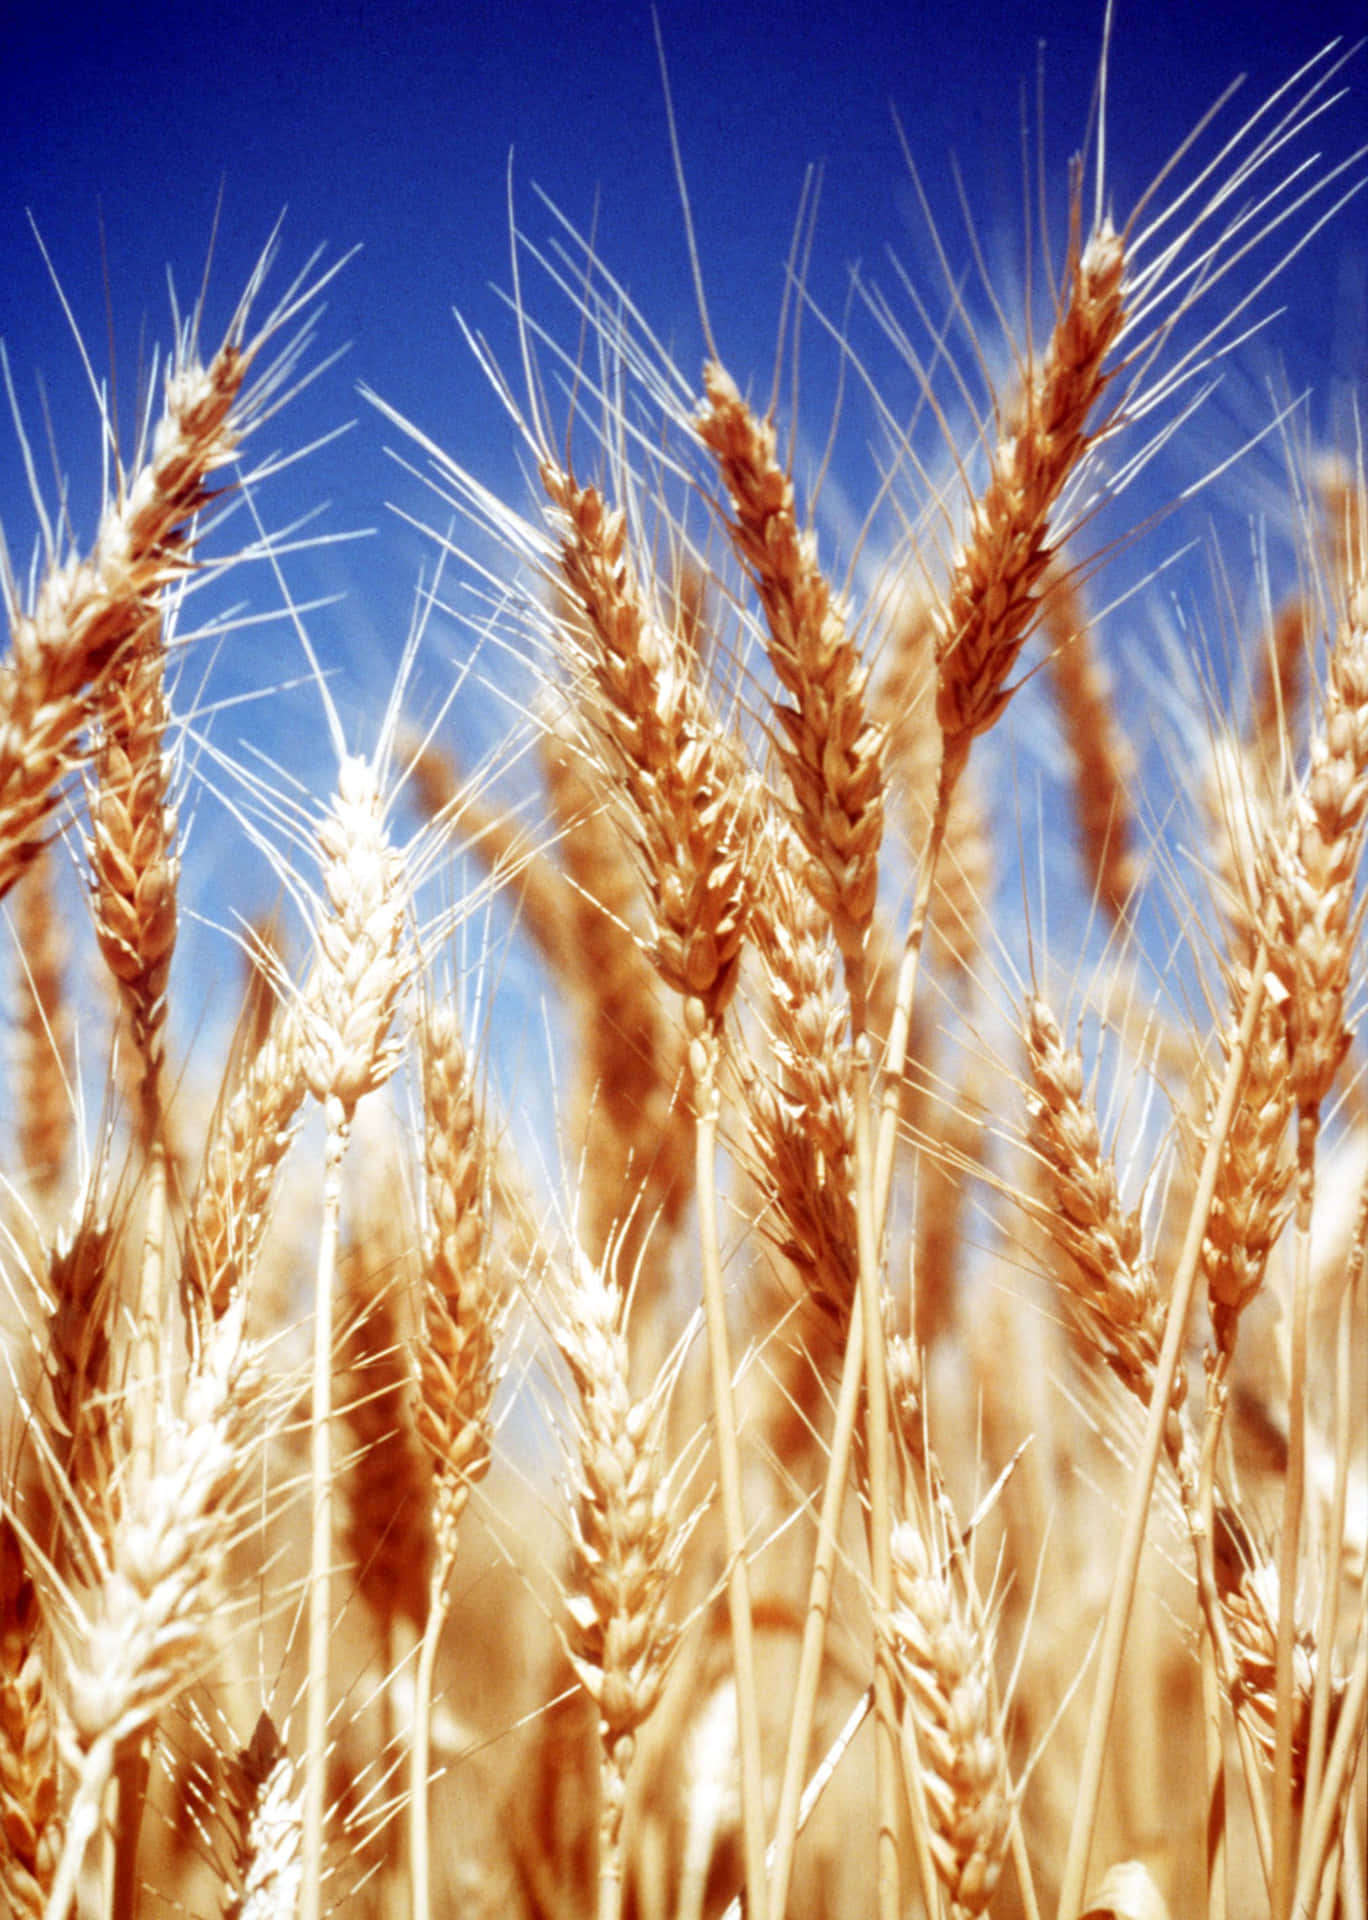 A Field Of Wheat